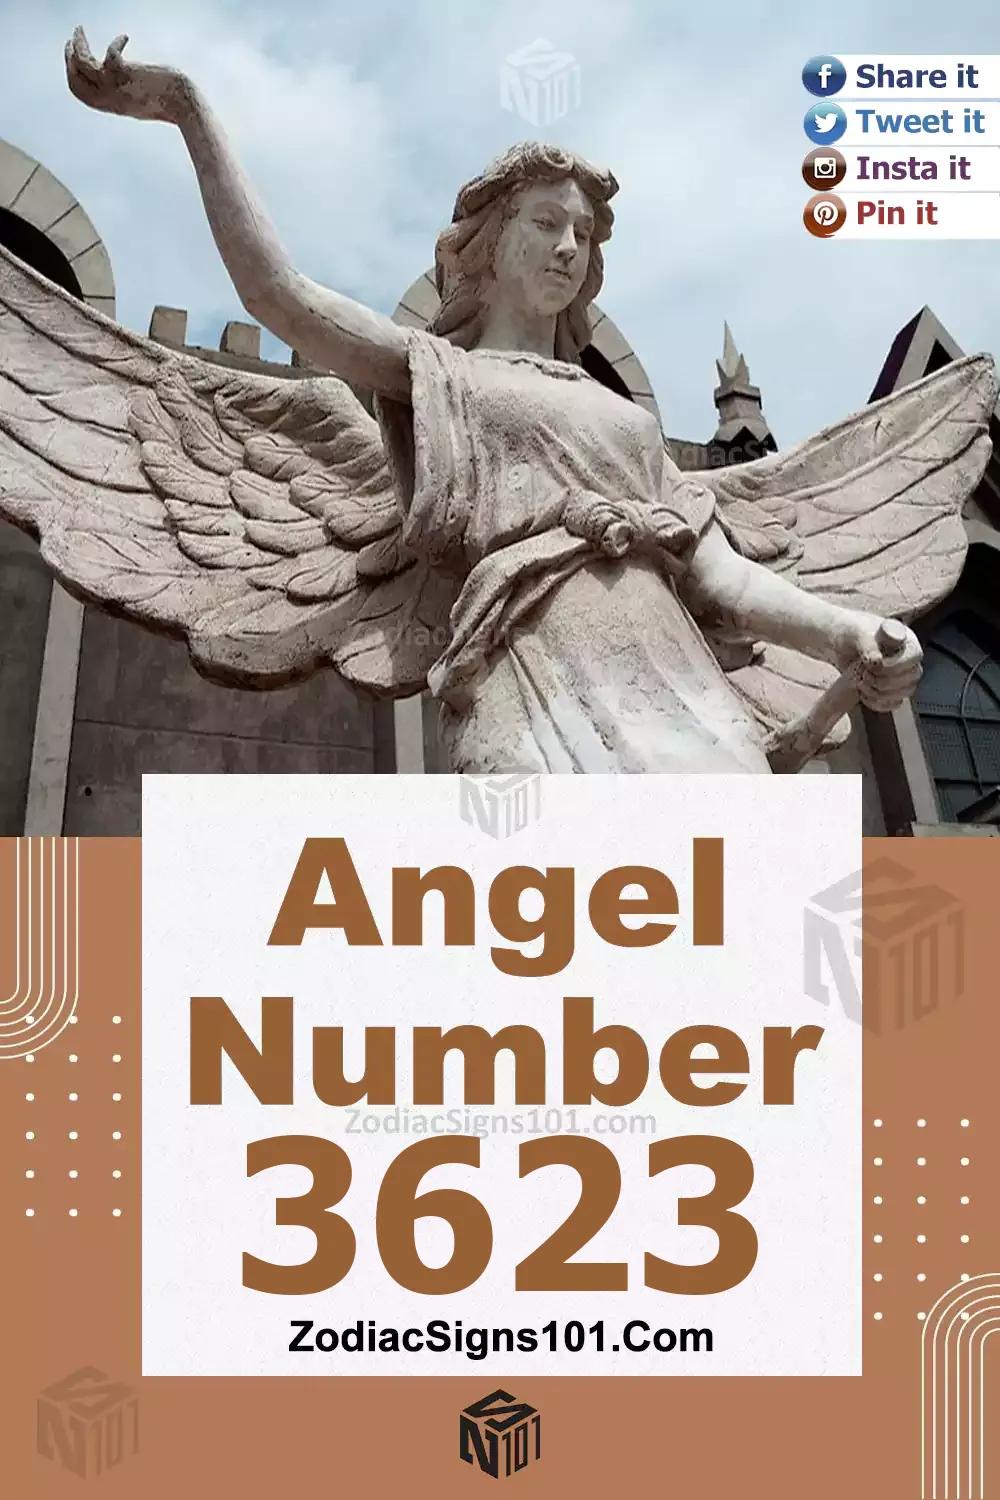 3623-Angel-Number-Meaning.jpg